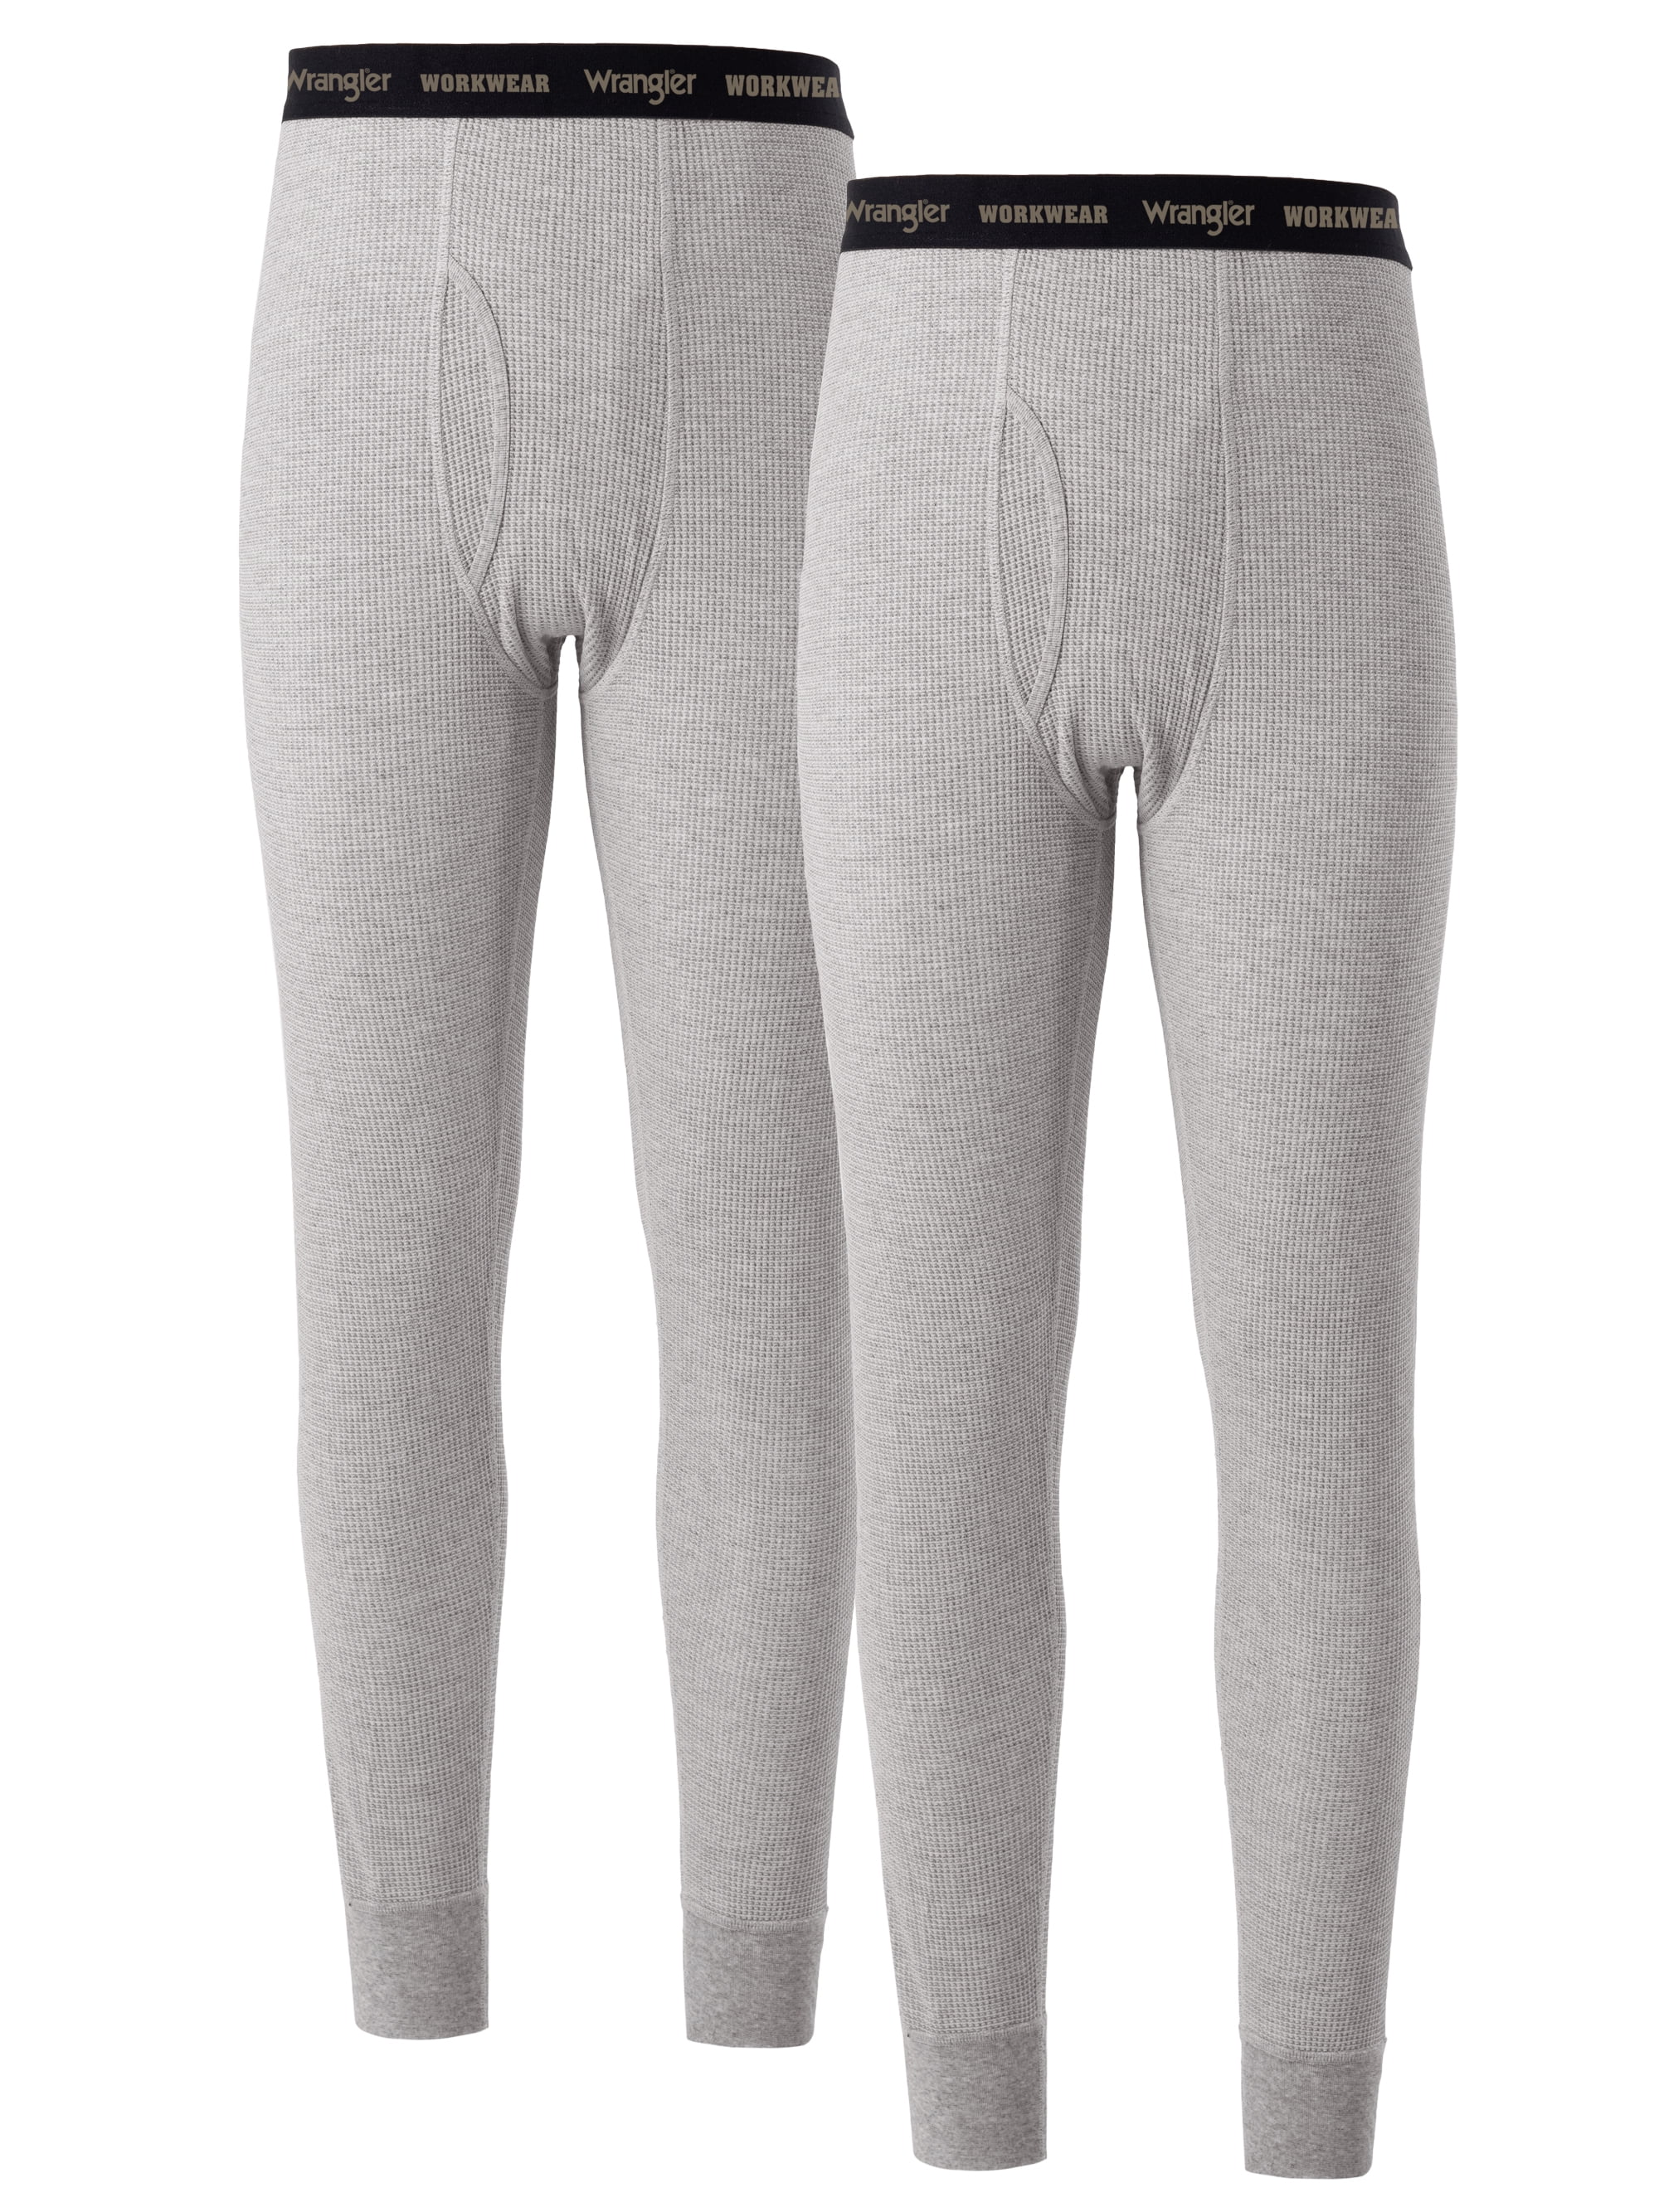 Jockey Men's Cotton Thermal Long Warm Pants Leggings Large Size